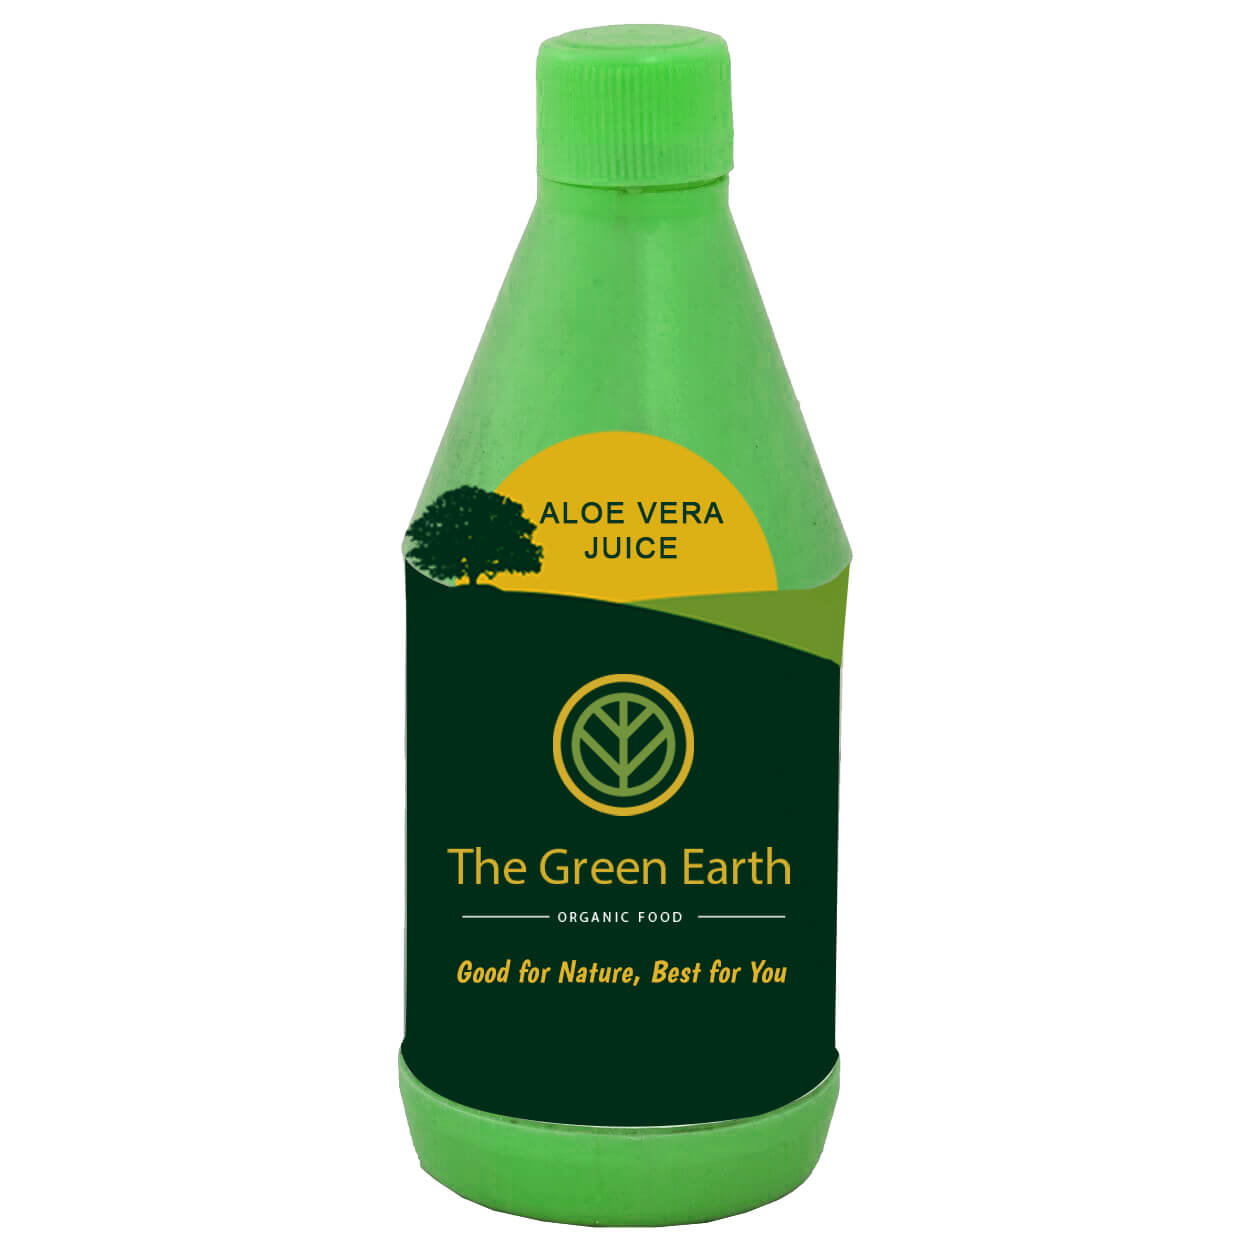 green aloe vera drink